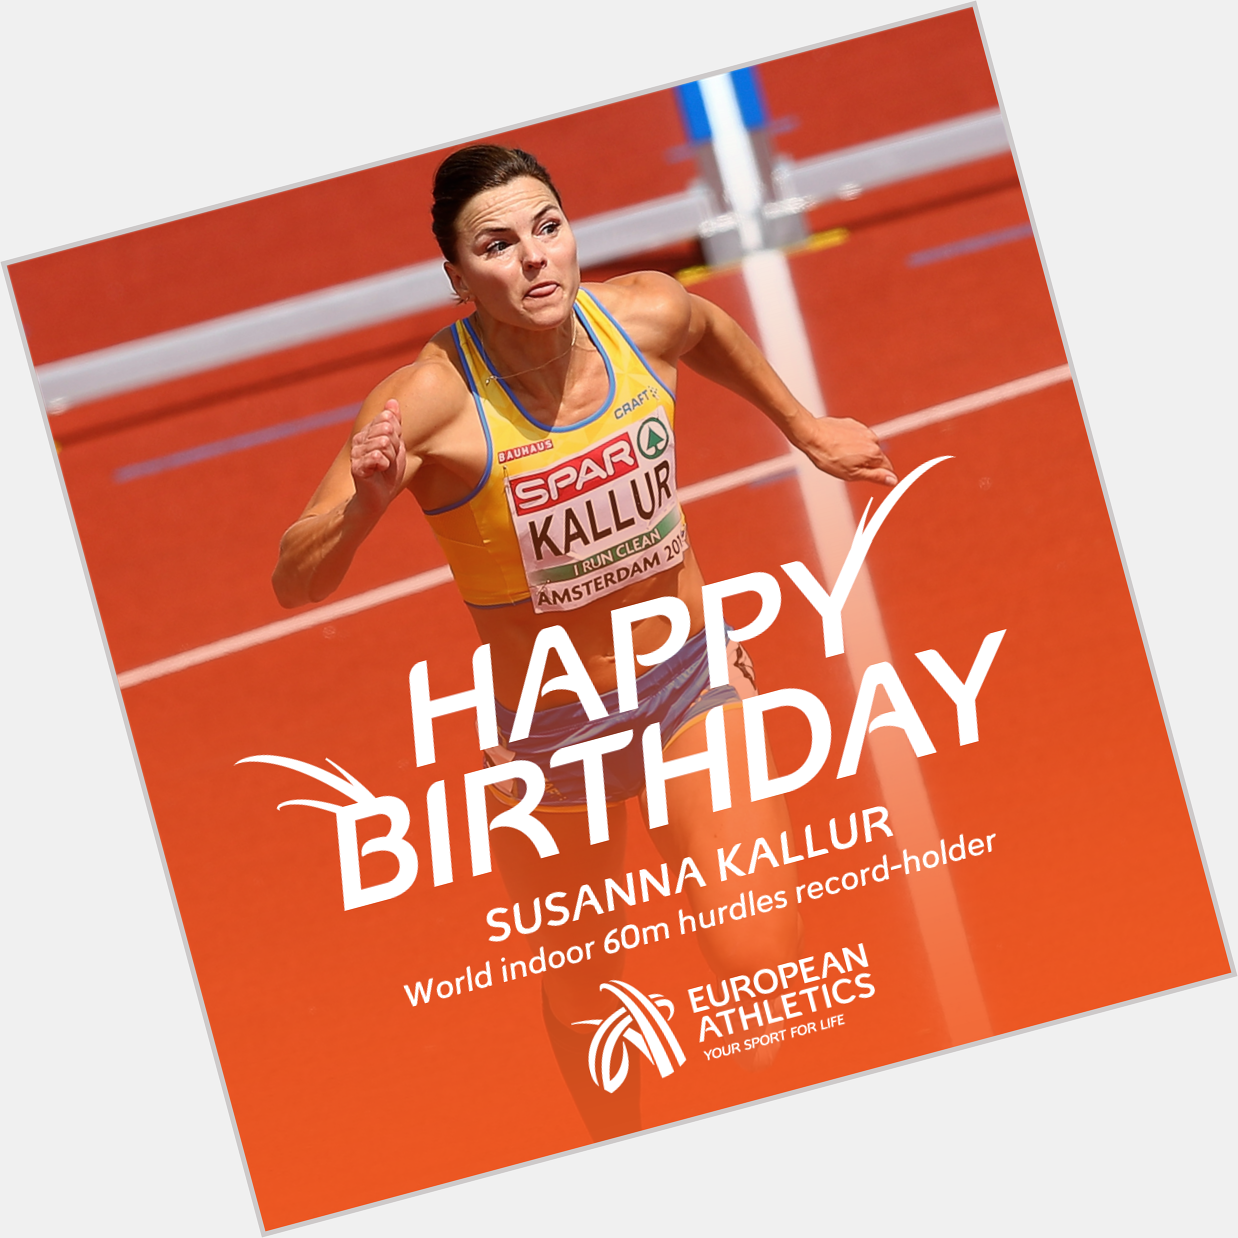 Happy birthday to world 60m hurdles record-holder and 2006 European 100m hurdles champion Susanna Kallur! 